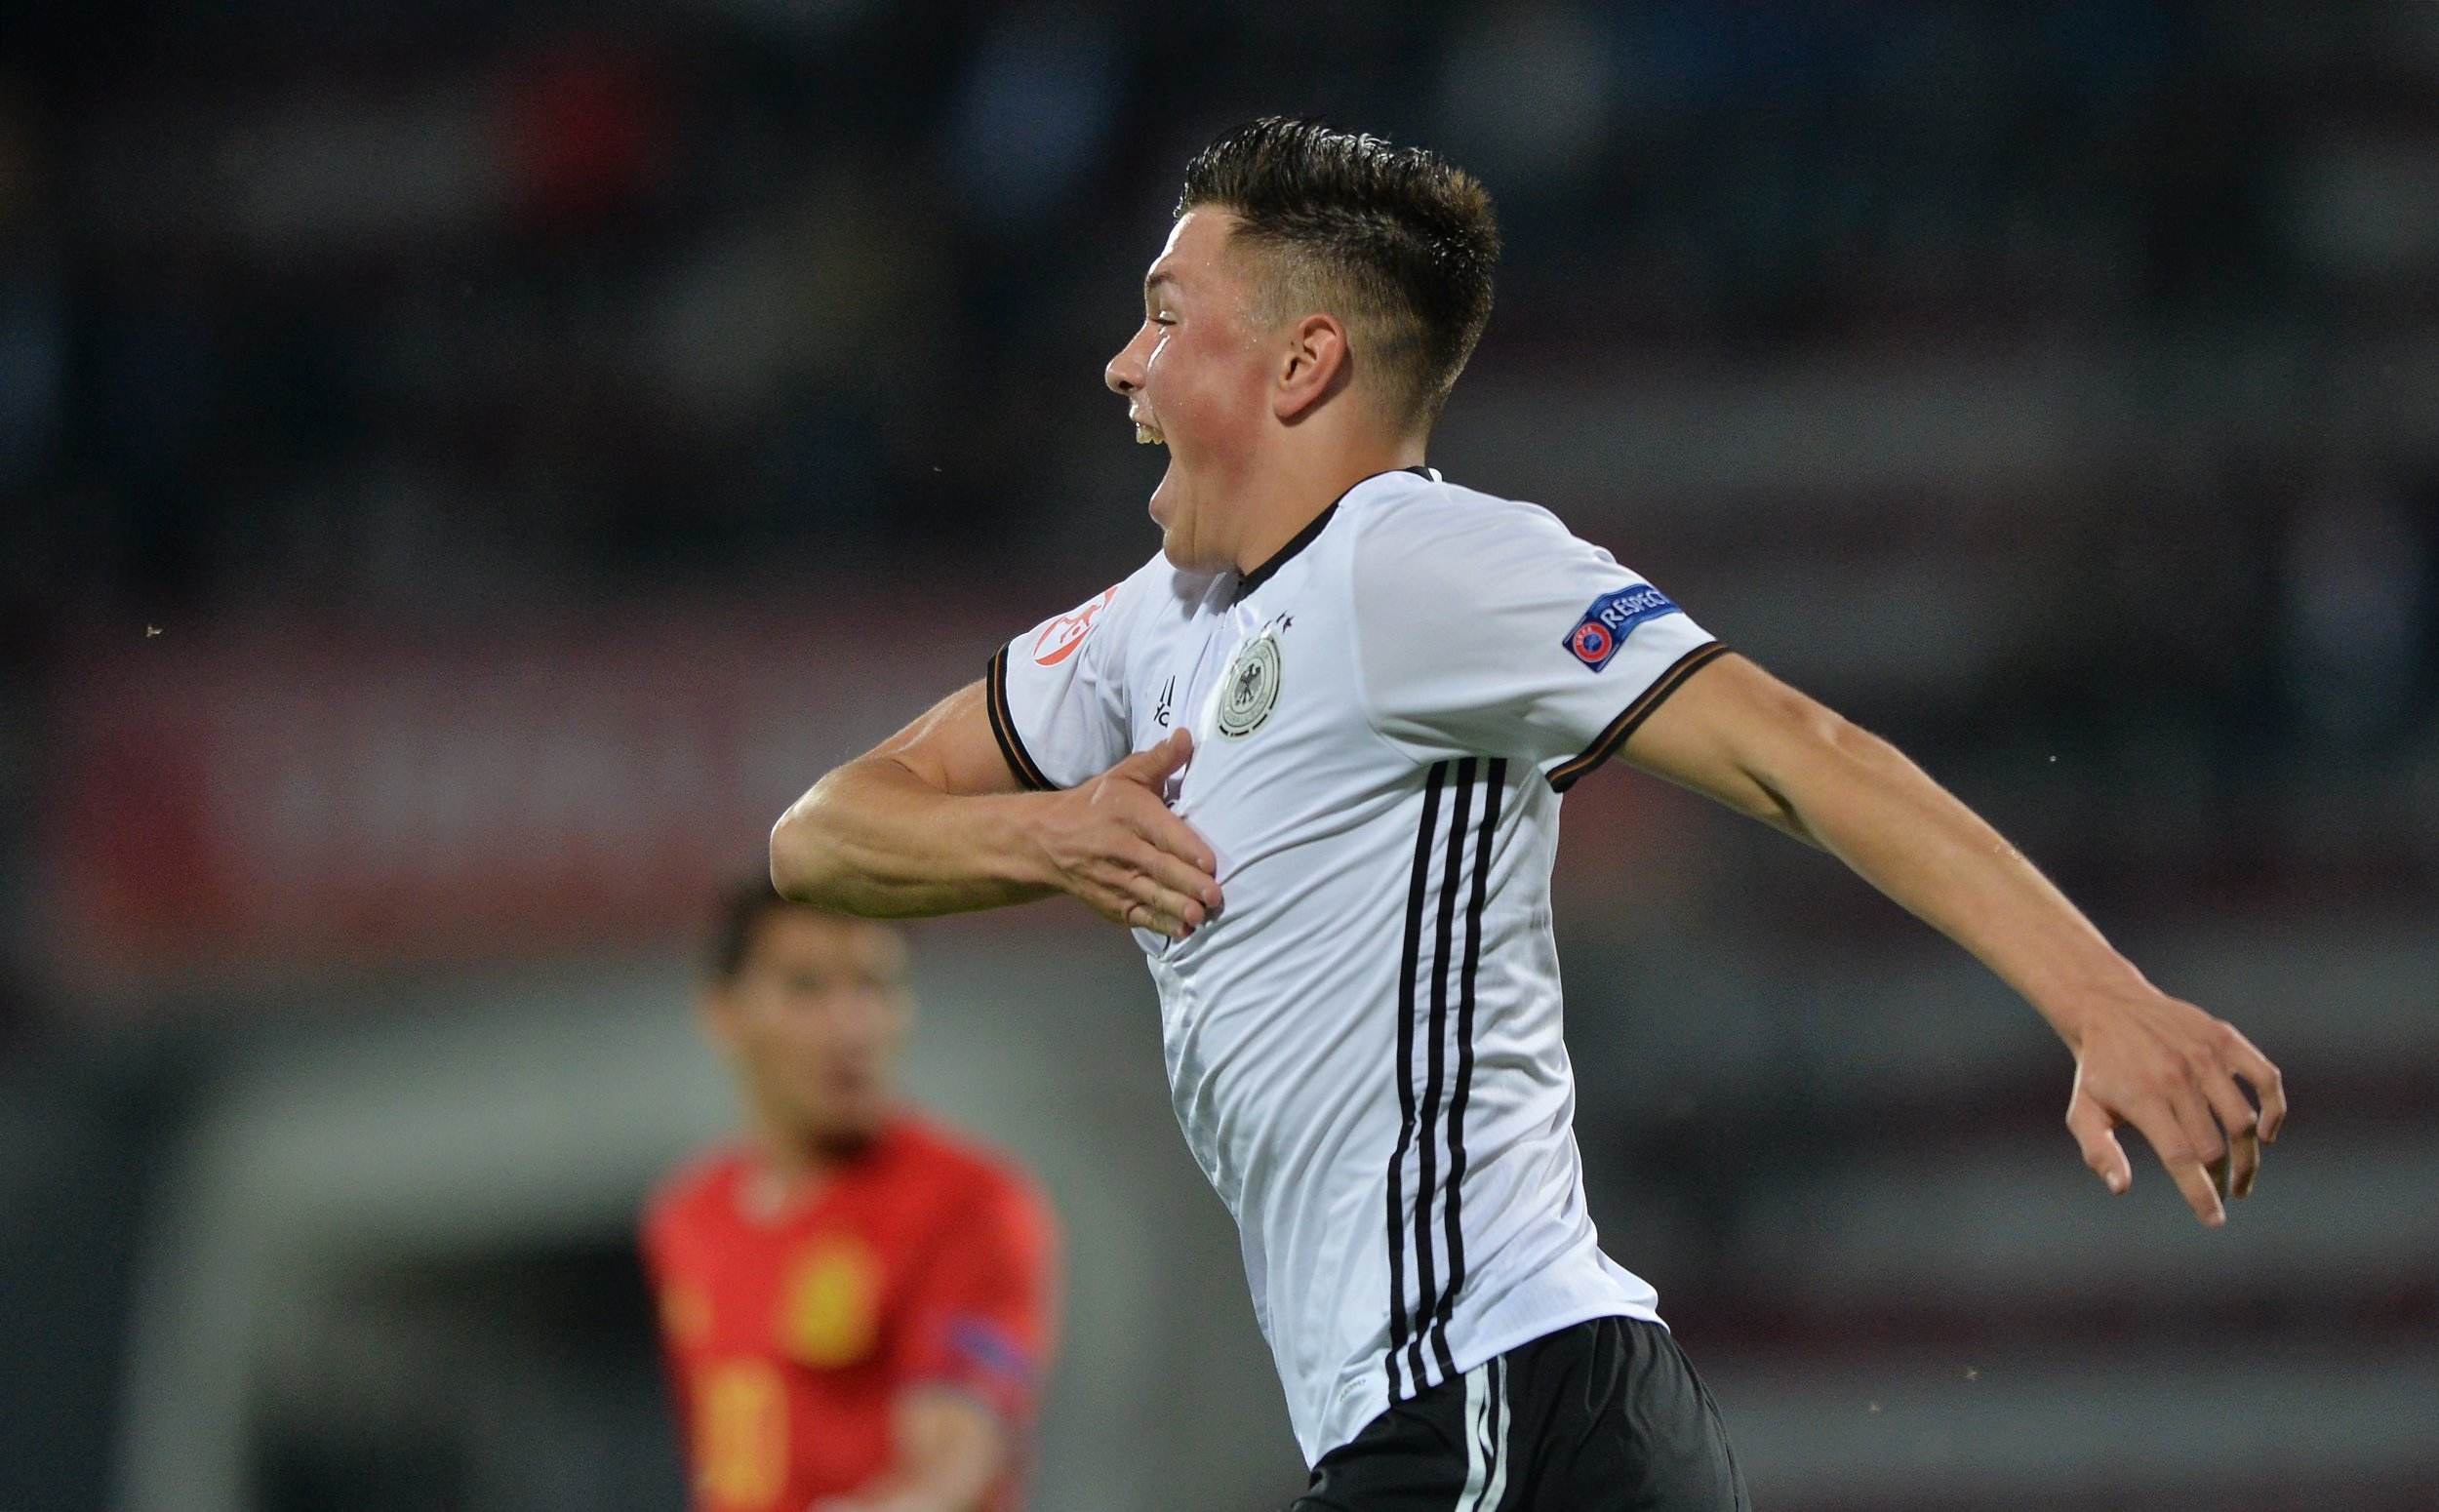  Dadashov of Germany celebrates his first goal against Spain in Azerbaijan 2016 /  UEFA / Sportsfile  